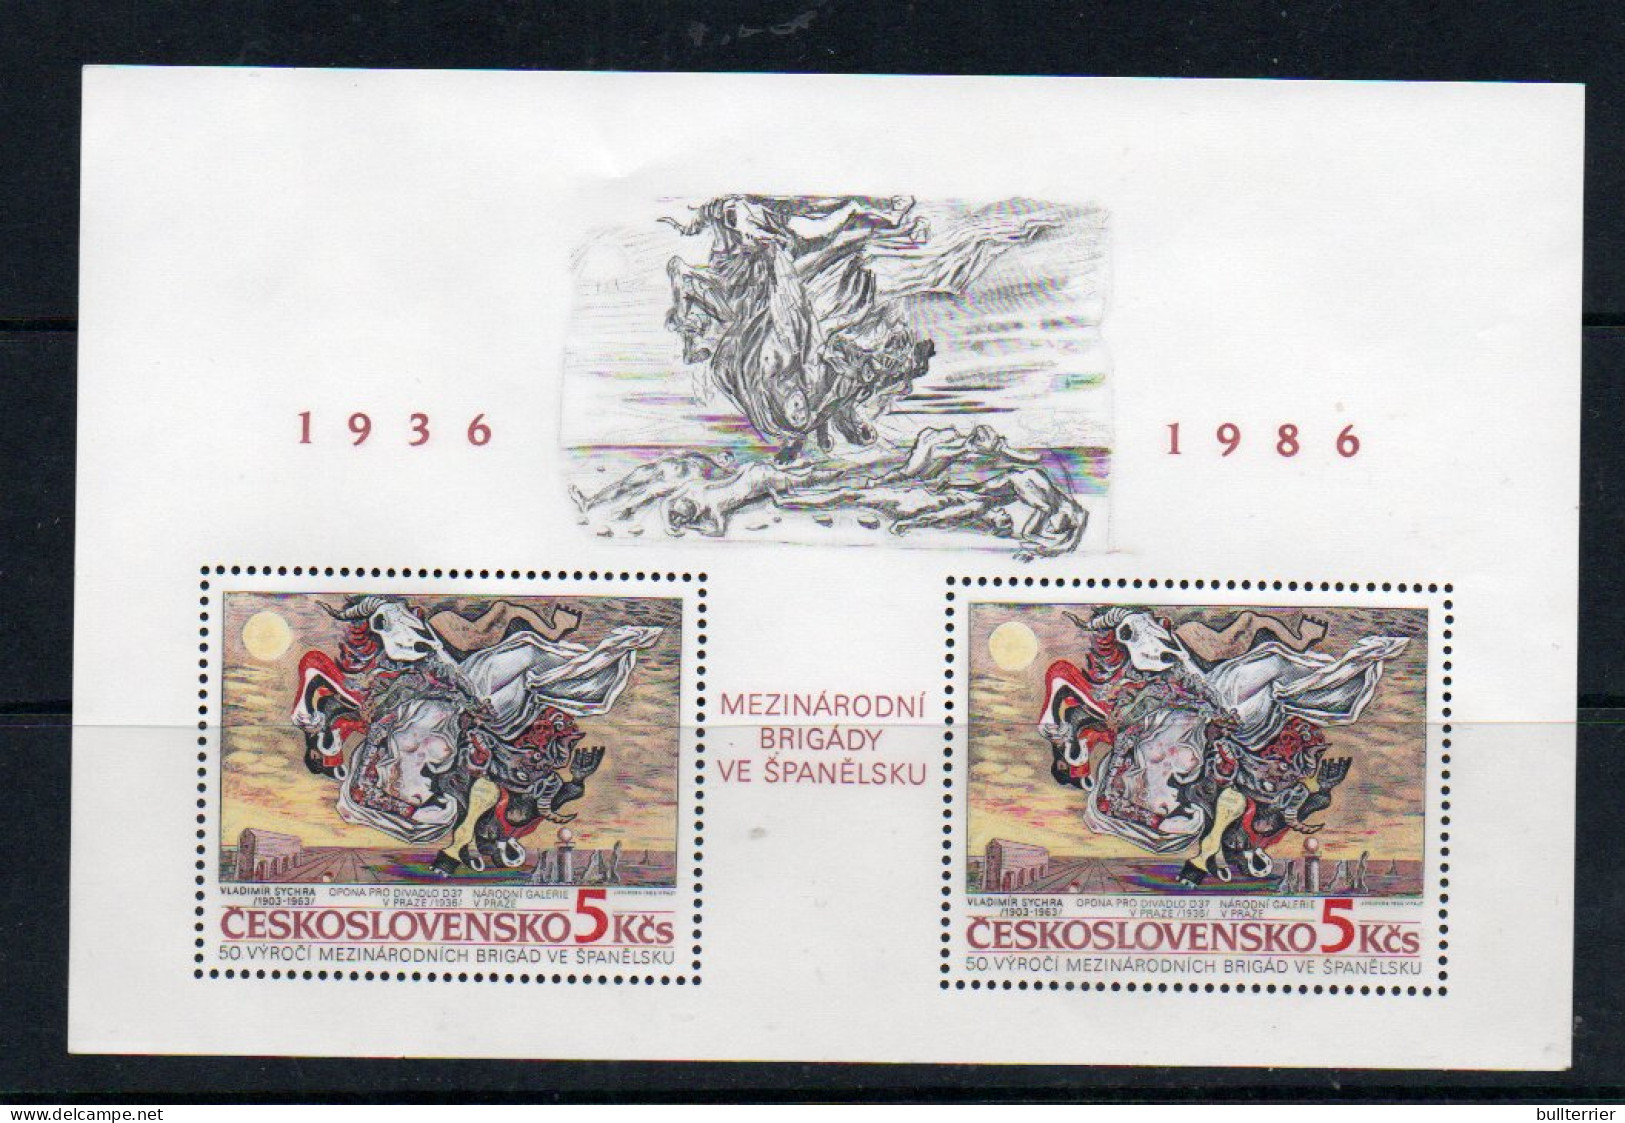 CZECHOSLOVAKIA - 1986- INTERNATIONAL BRIGADES  SOUVENIR SHEET MINT NEVER HINGED  - Nuevos